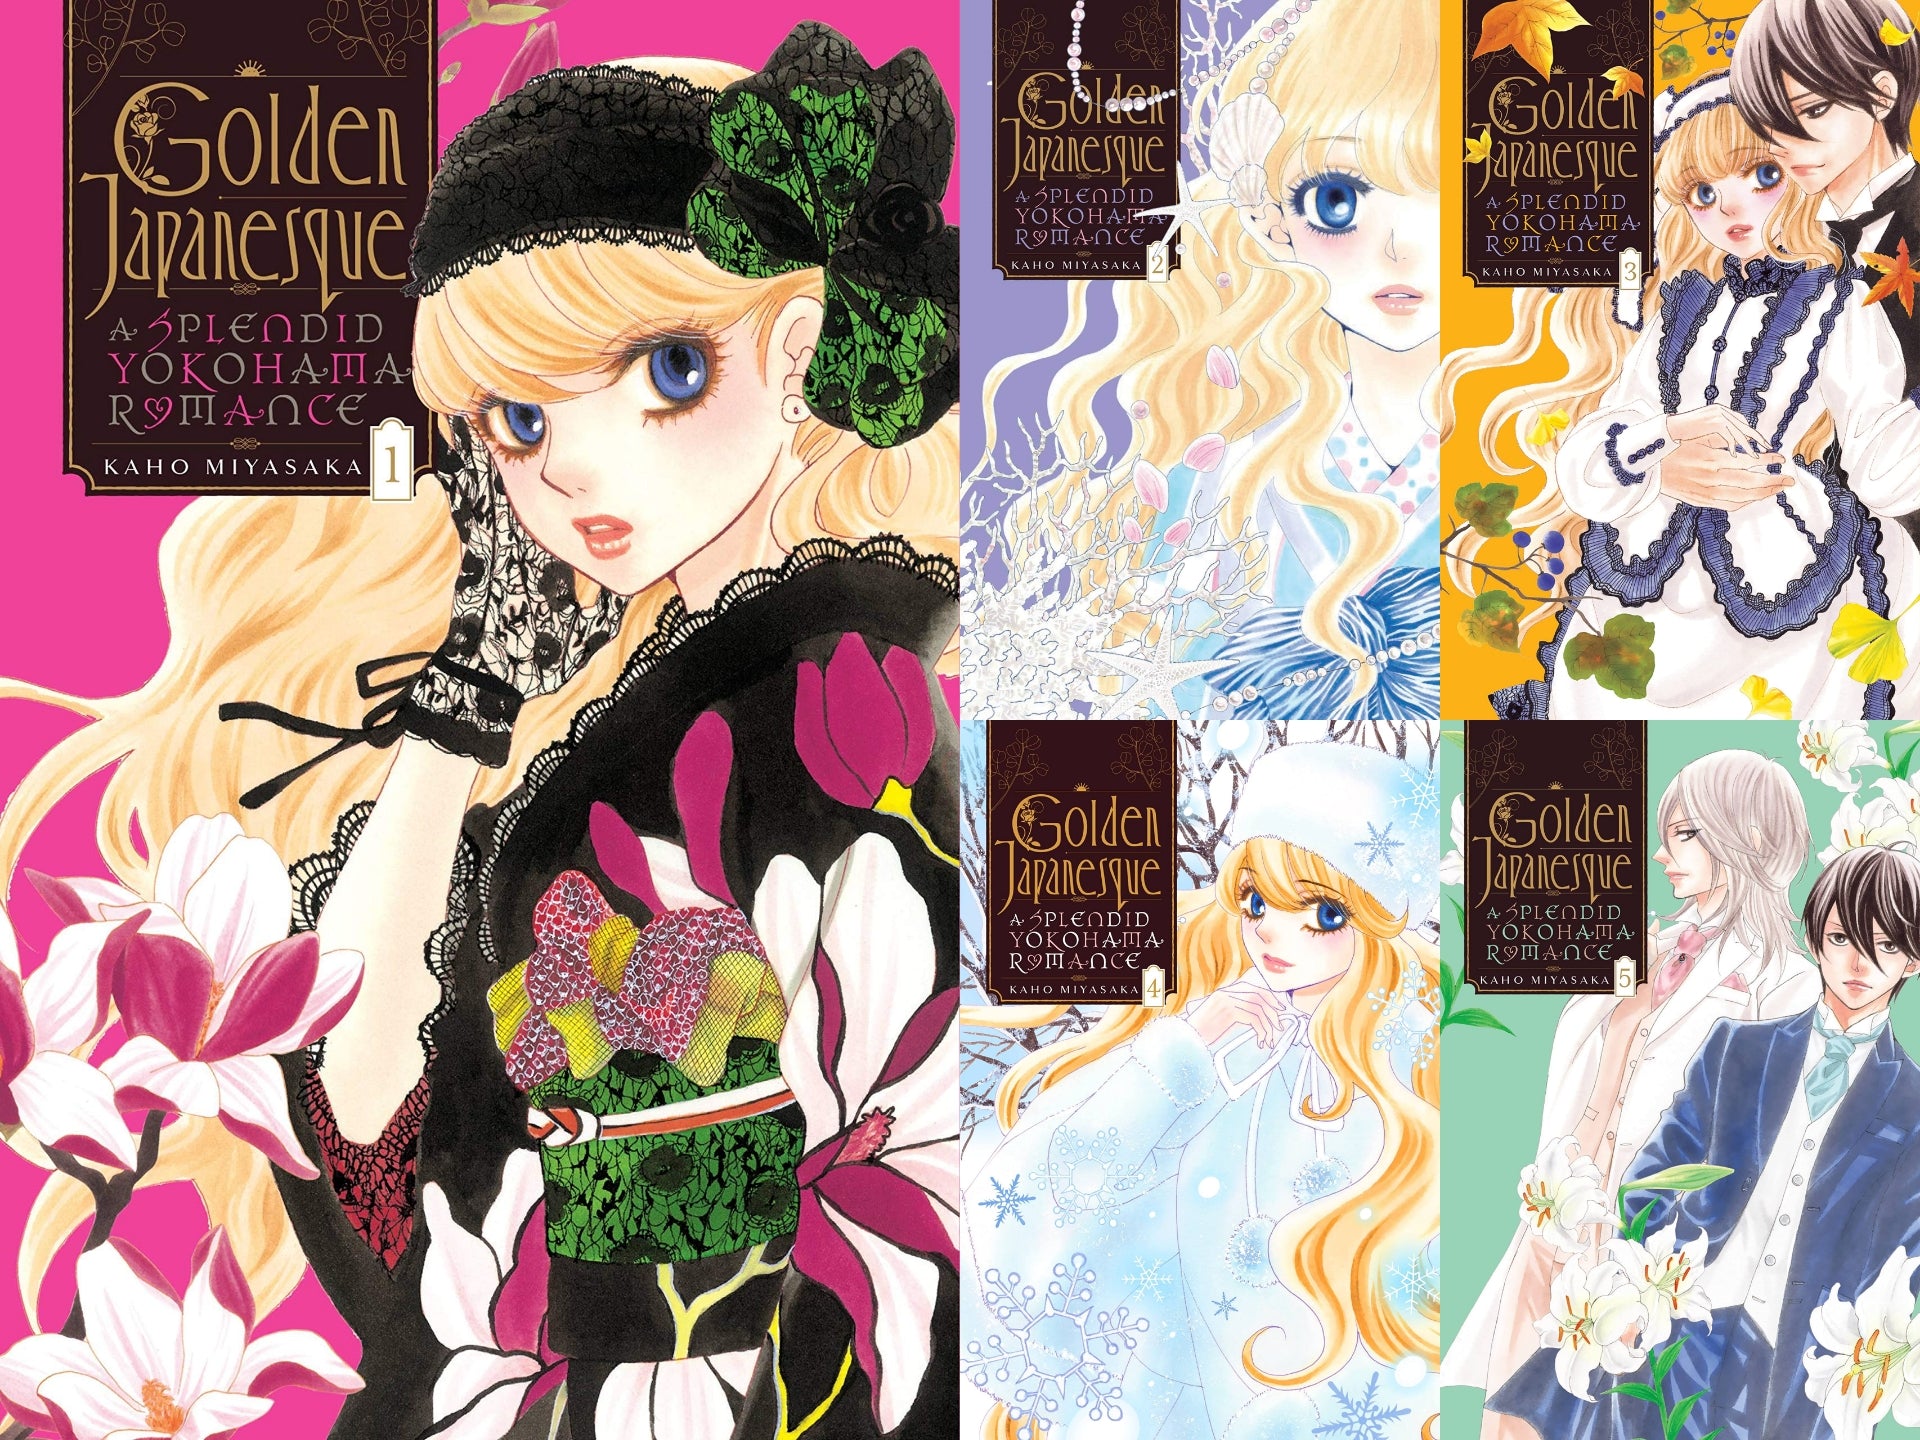 Golden Japanesque: A Splendid Yokohama Romance Full Current Set (1-5)